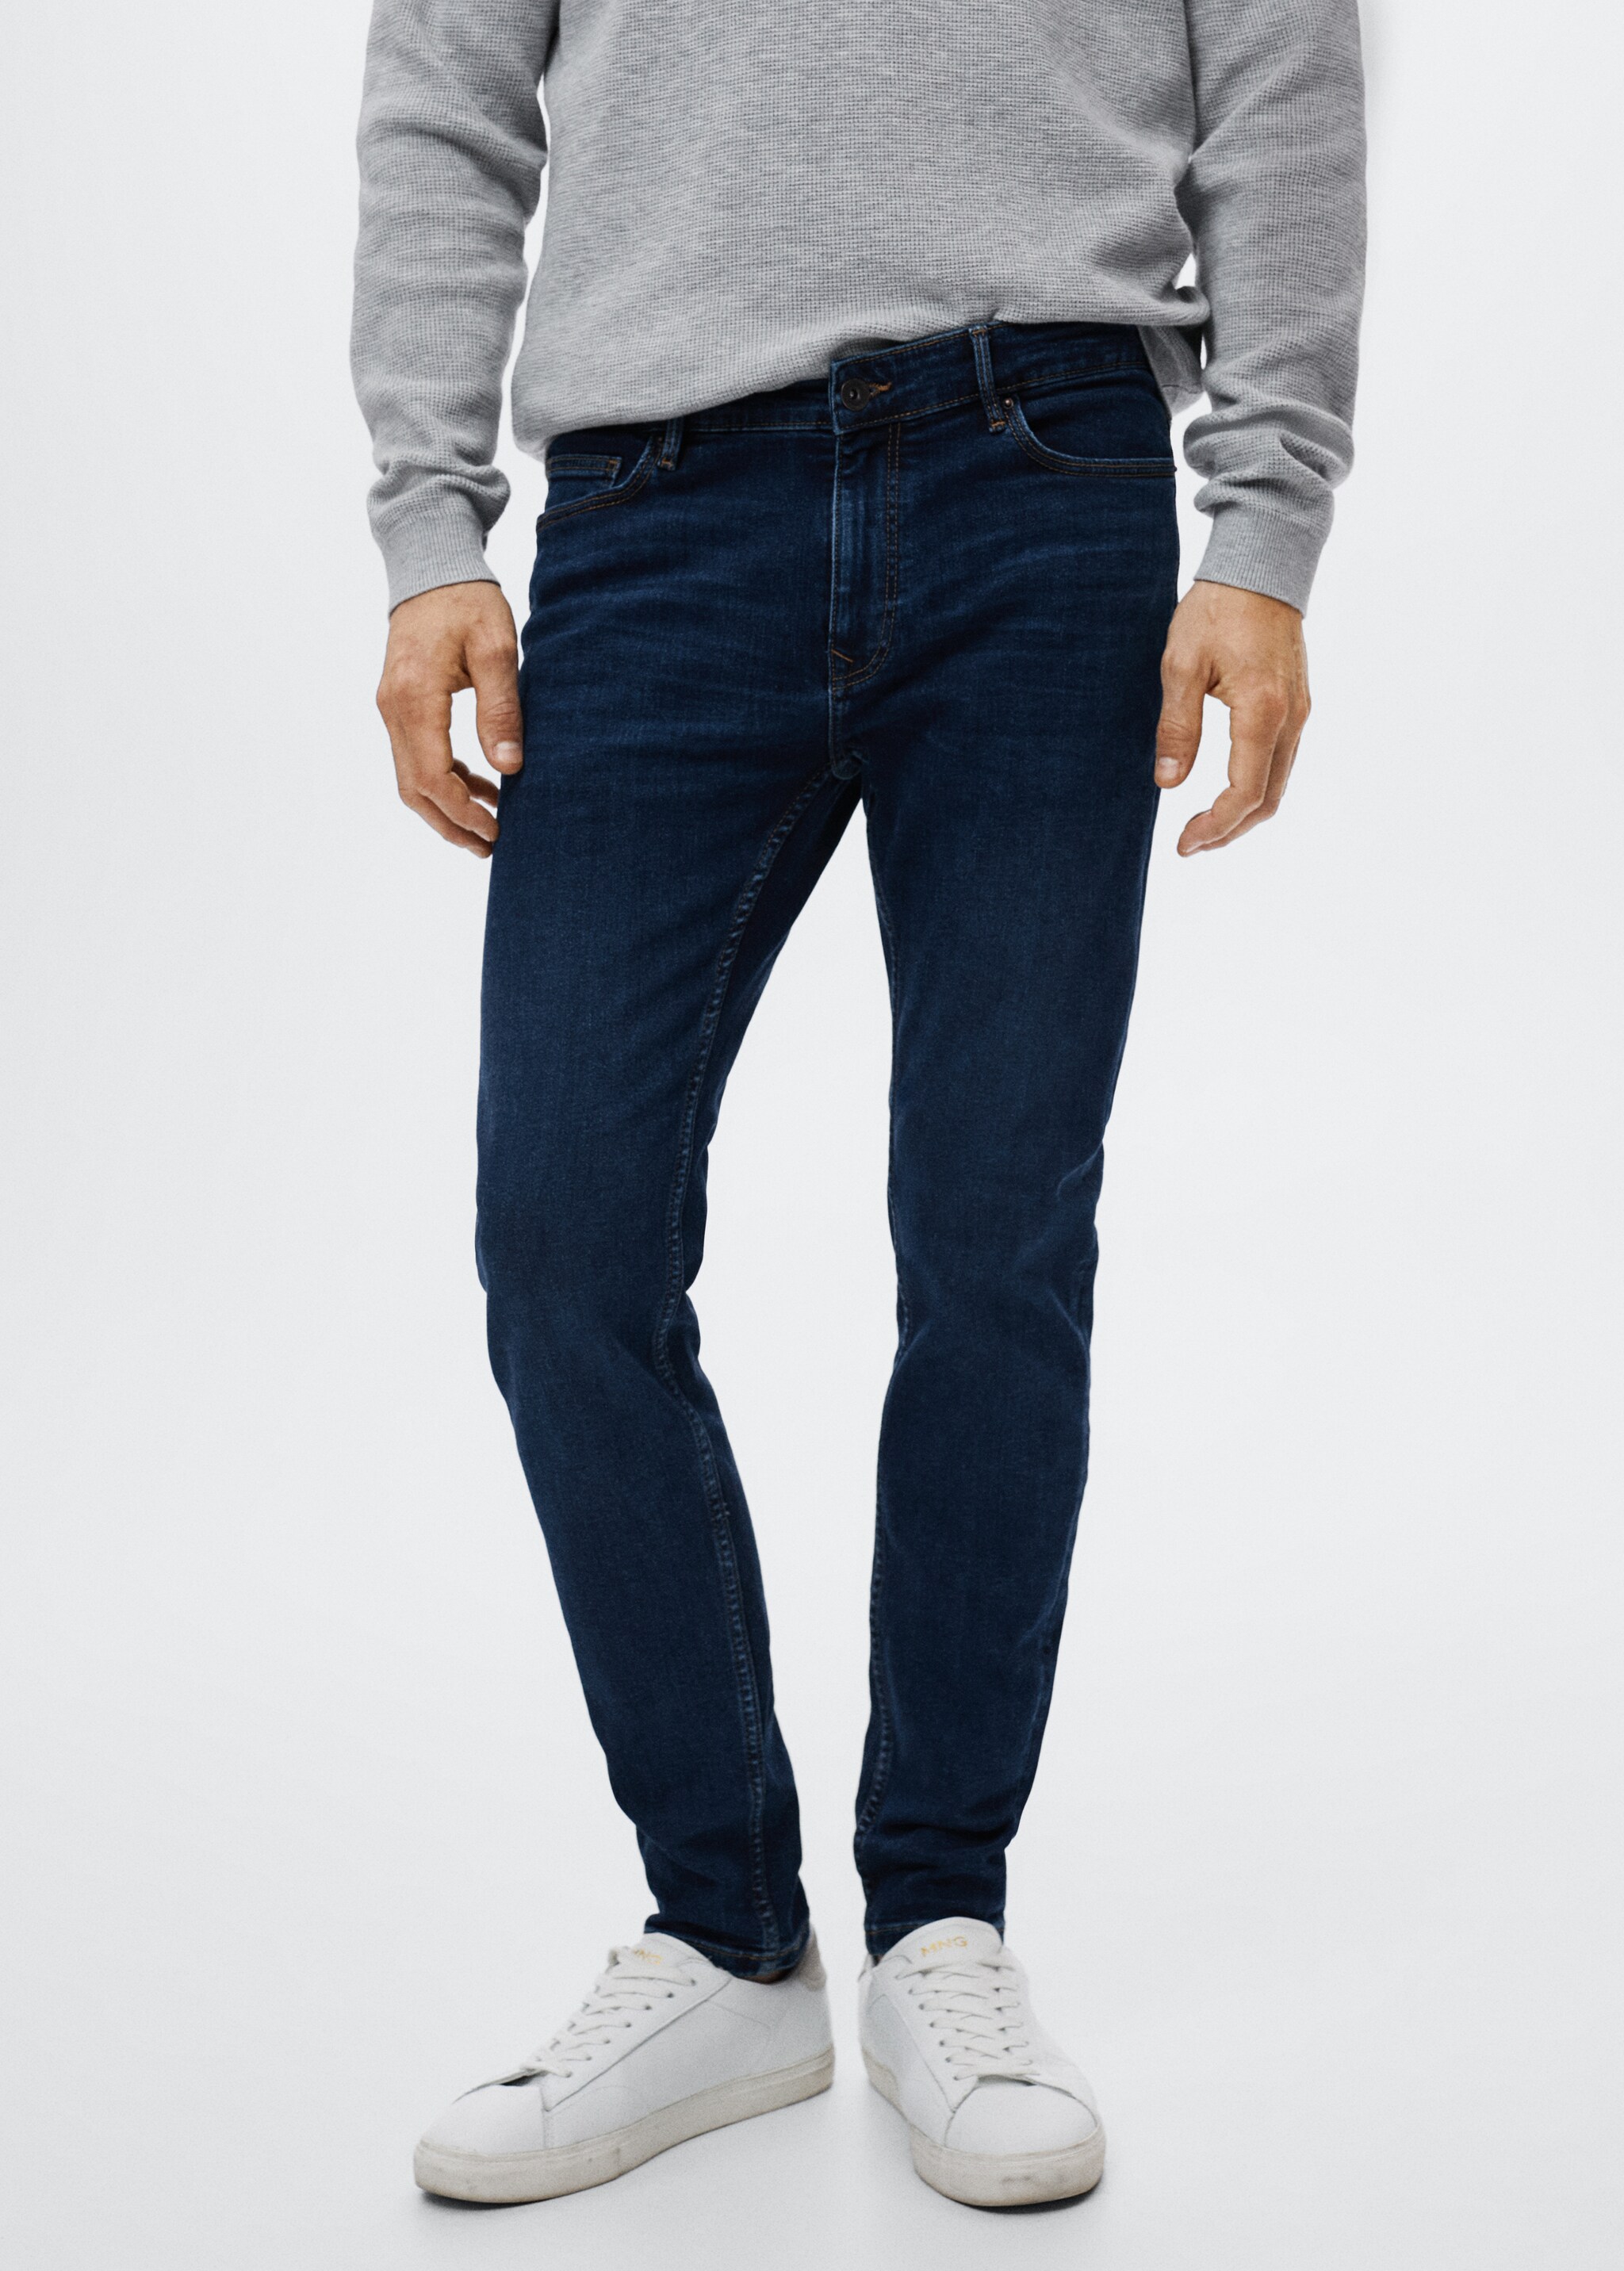 Jude skinny-fit jeans - Medium plane